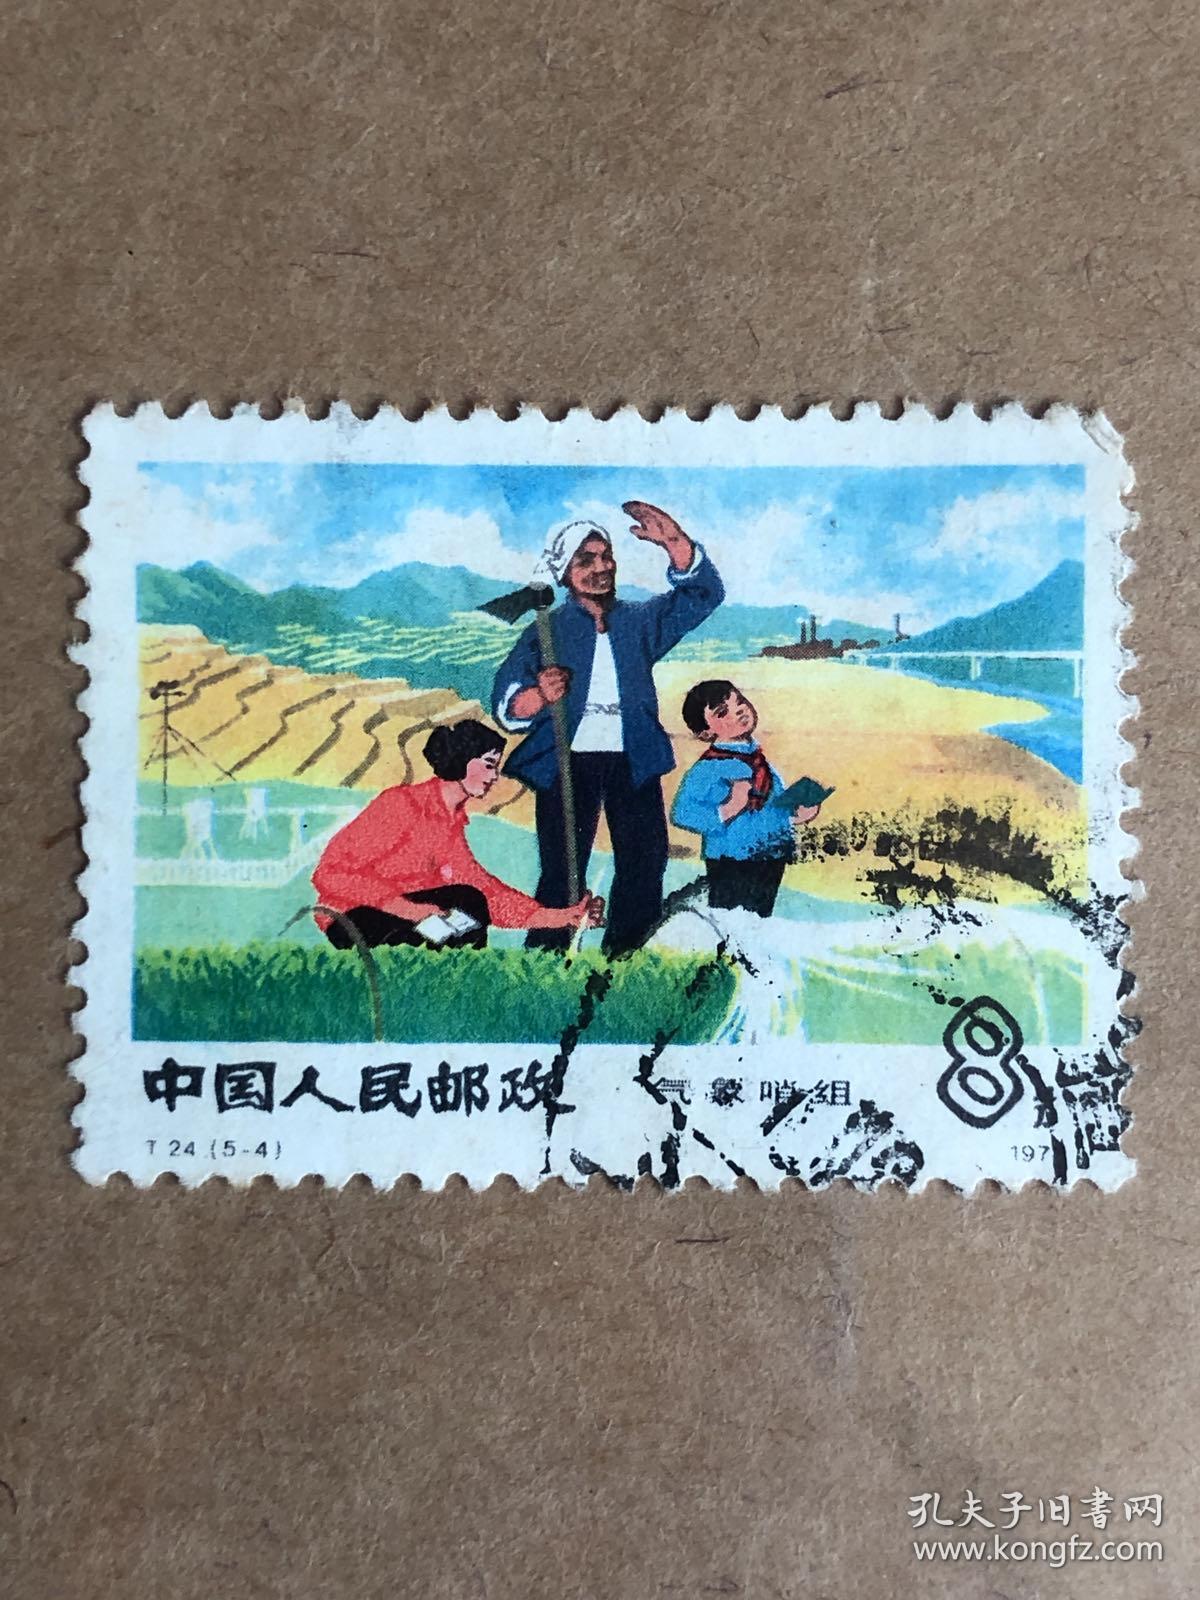 t24 气象 5-4 信销票 邮票 1978